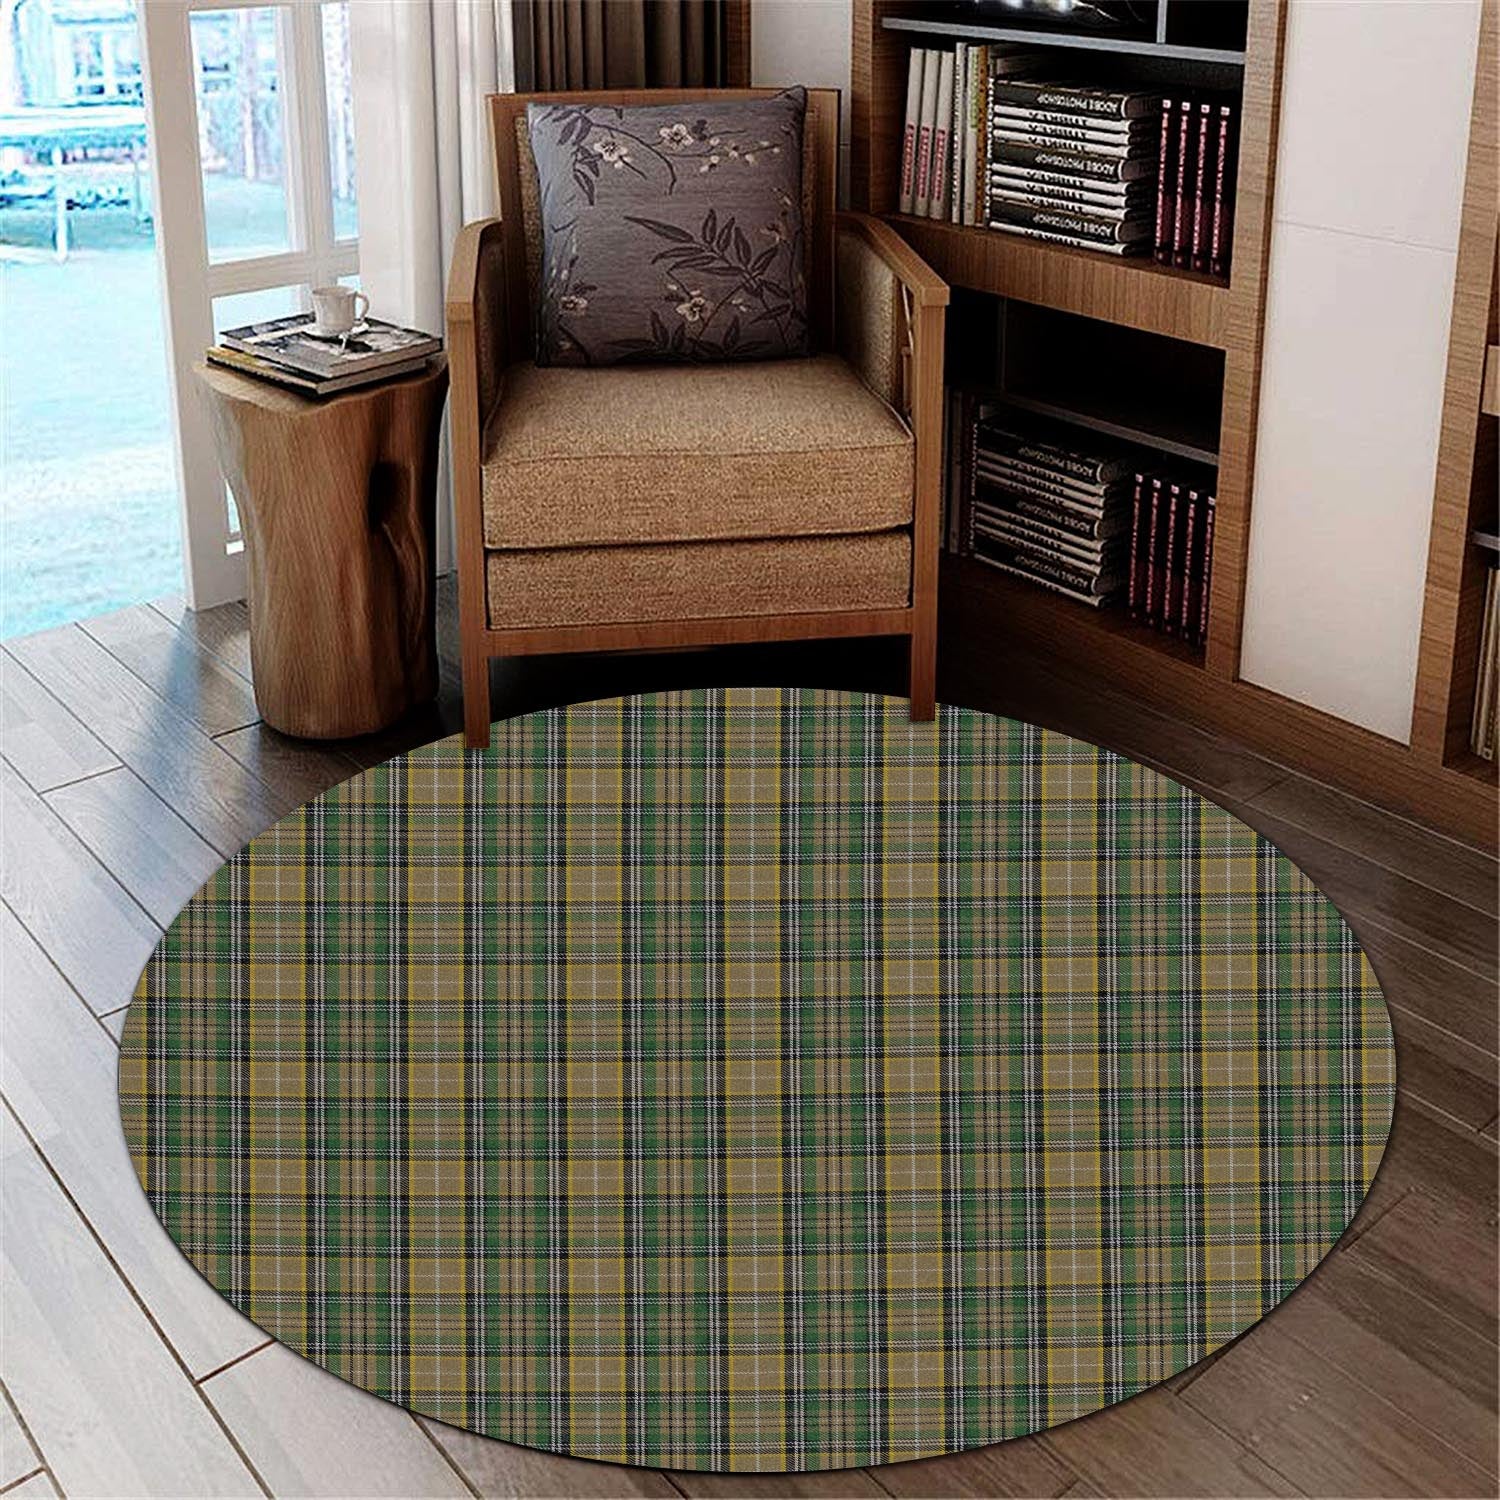 ofarrell-tartan-round-rug